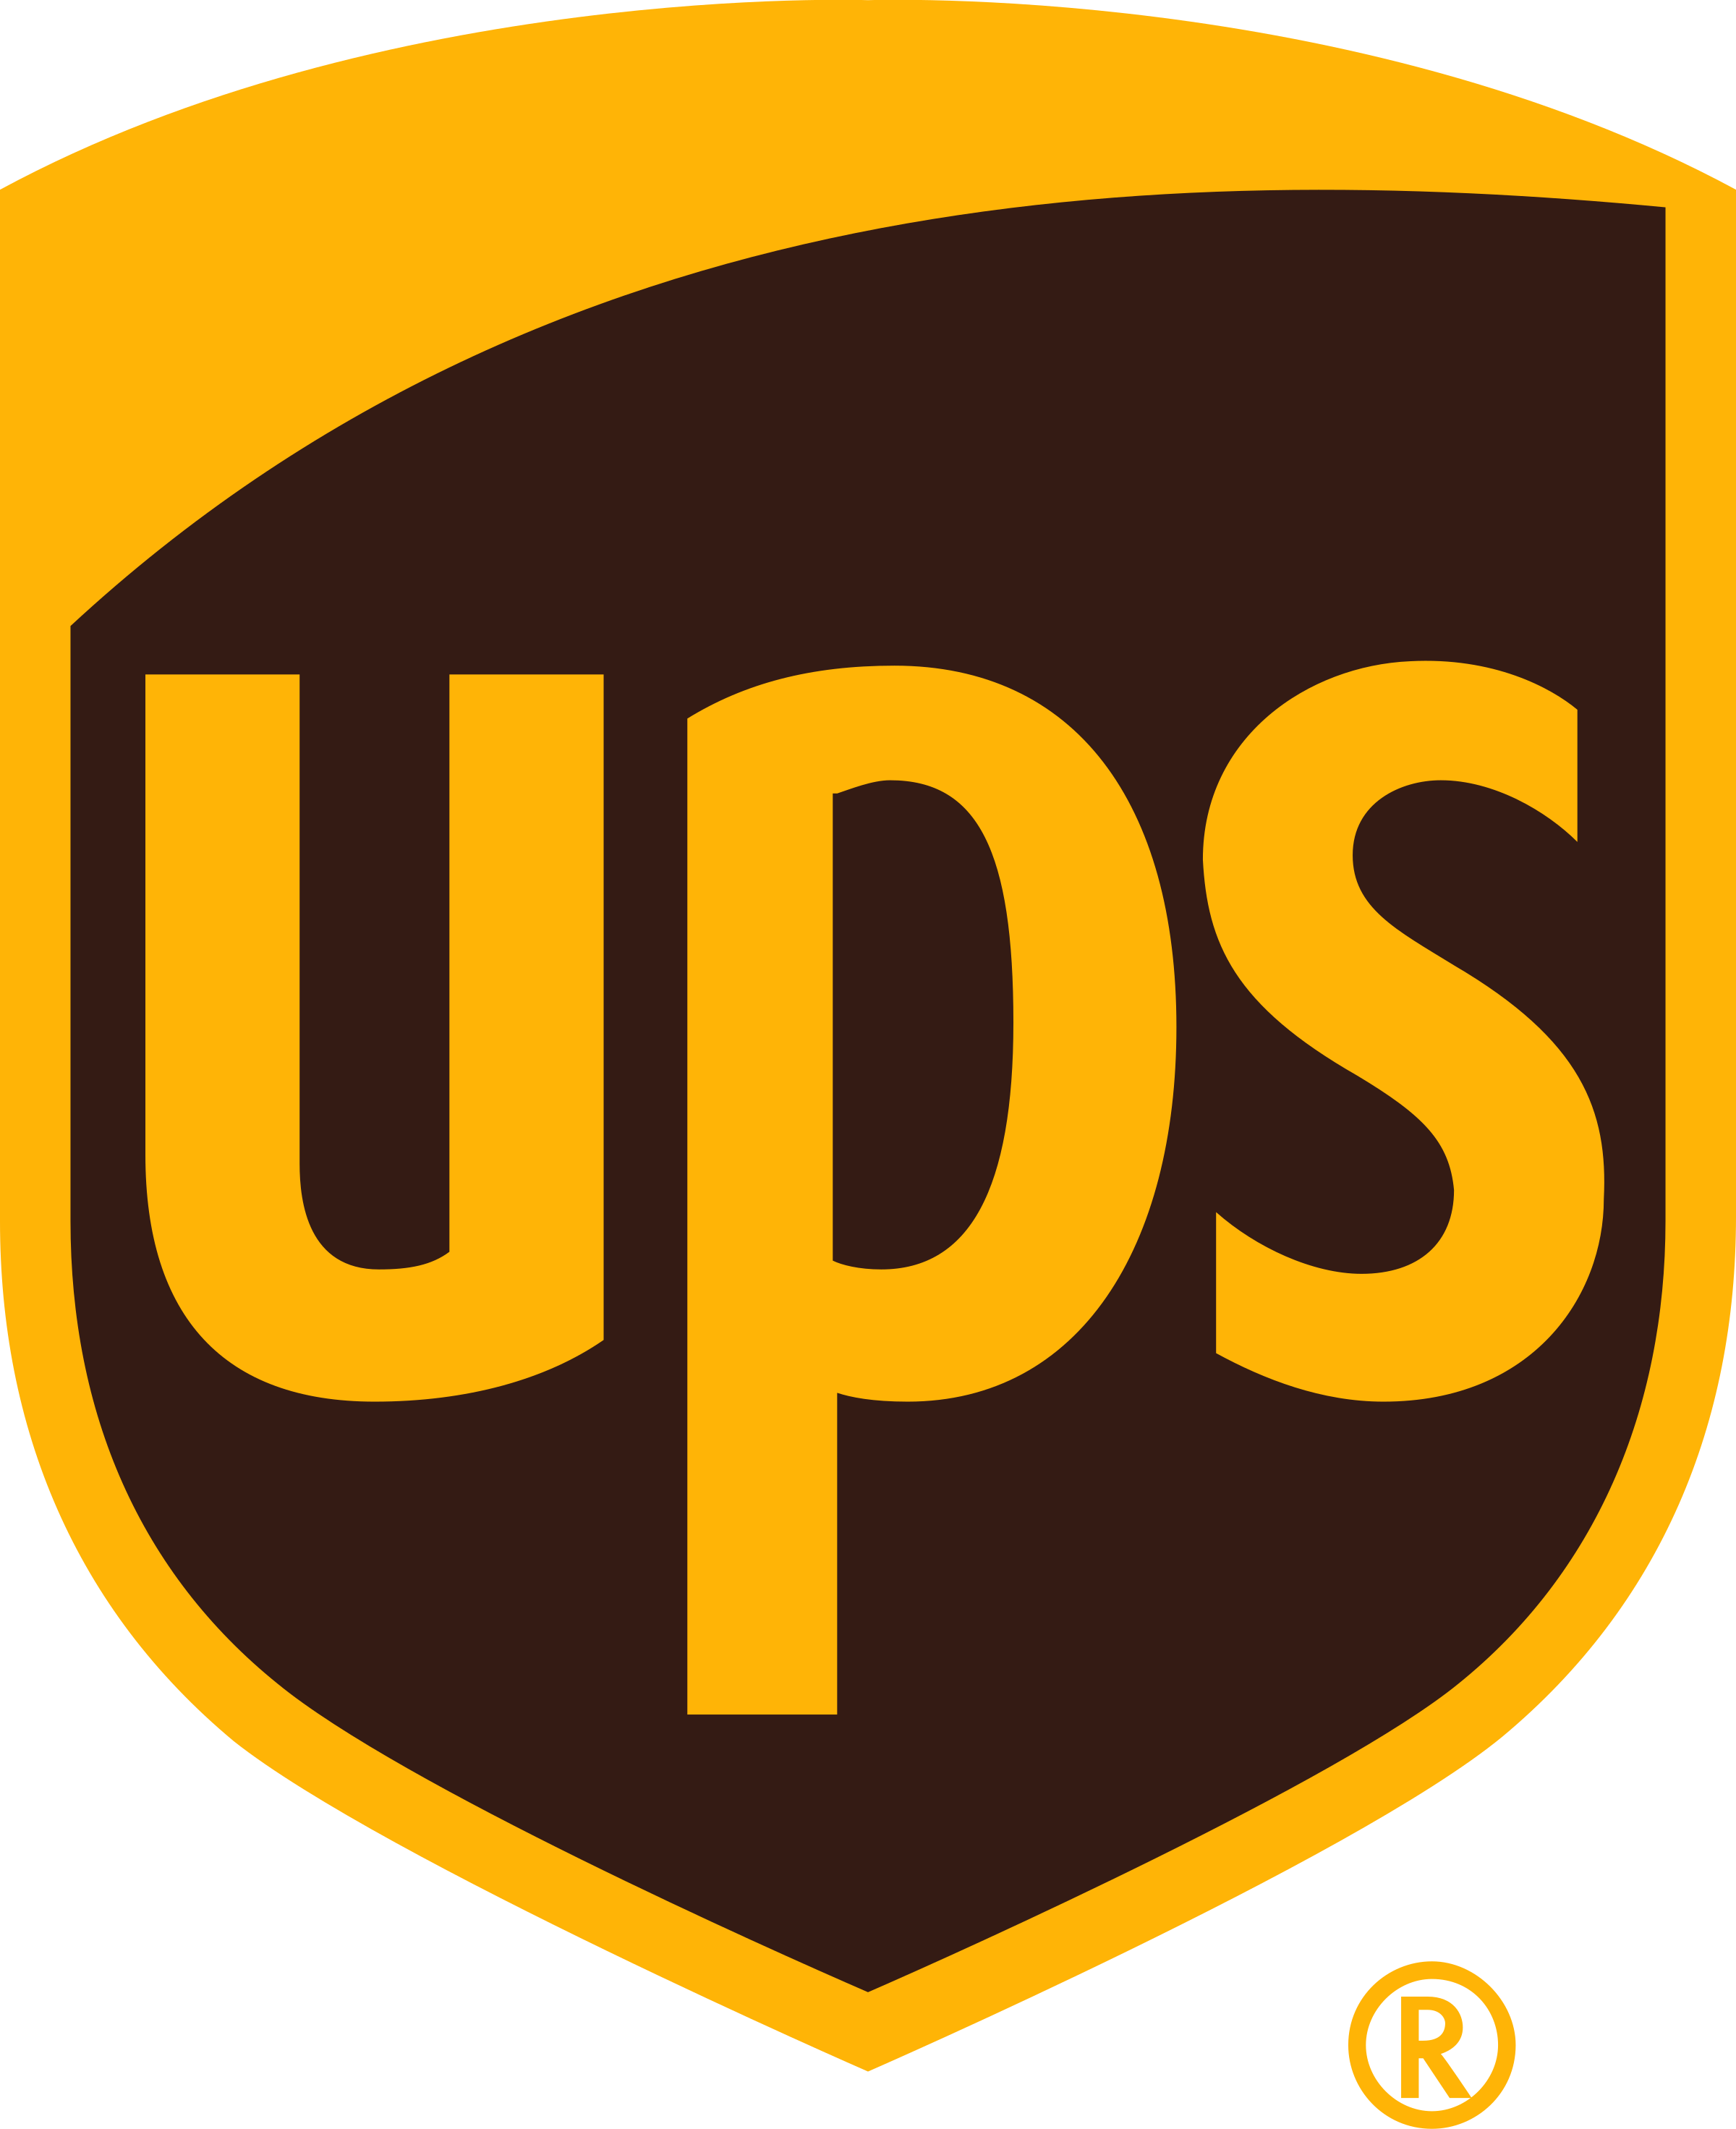 ups logo brown and yellow